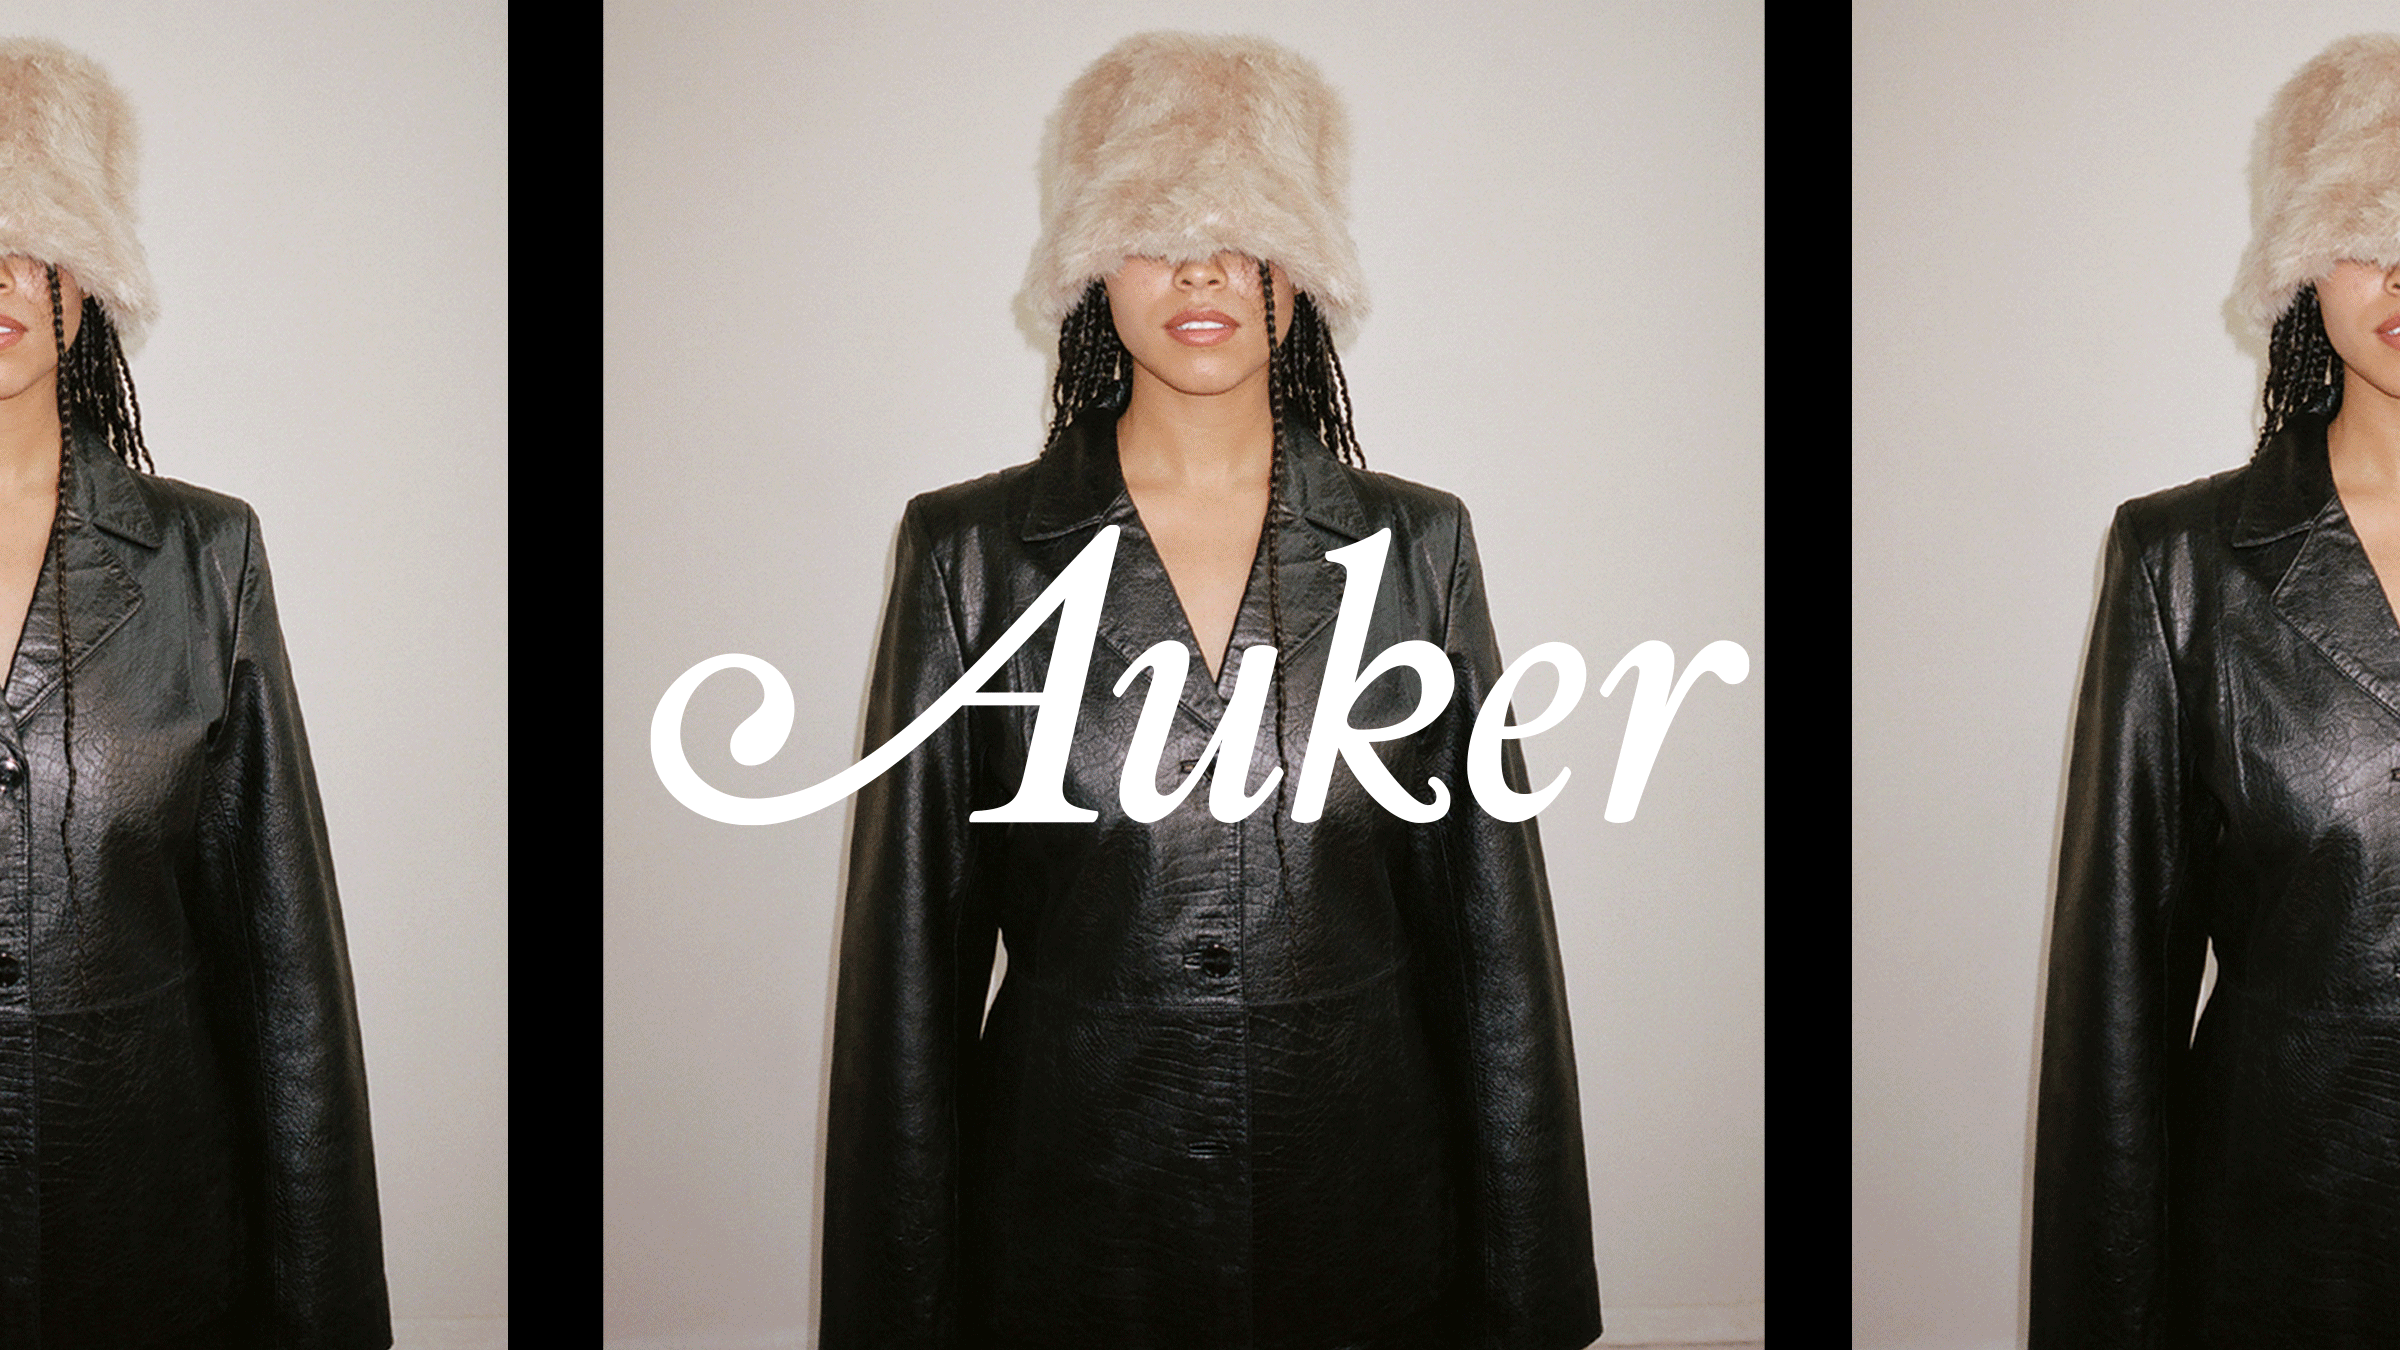  Auker (Branding, Creative Direction, Photography) 